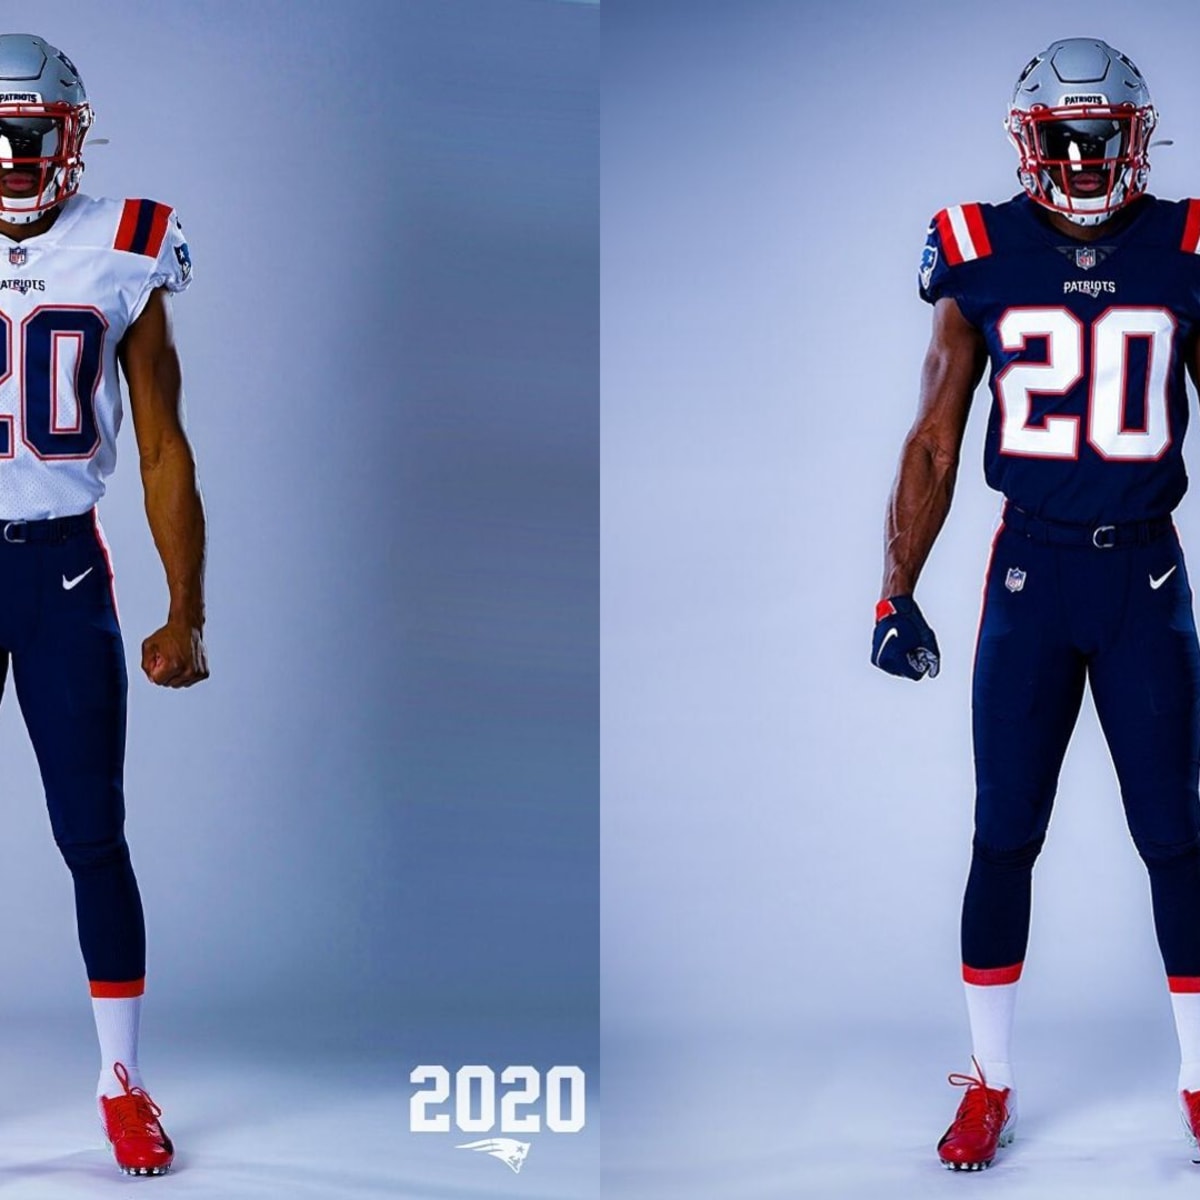 new patriots jersey 2020